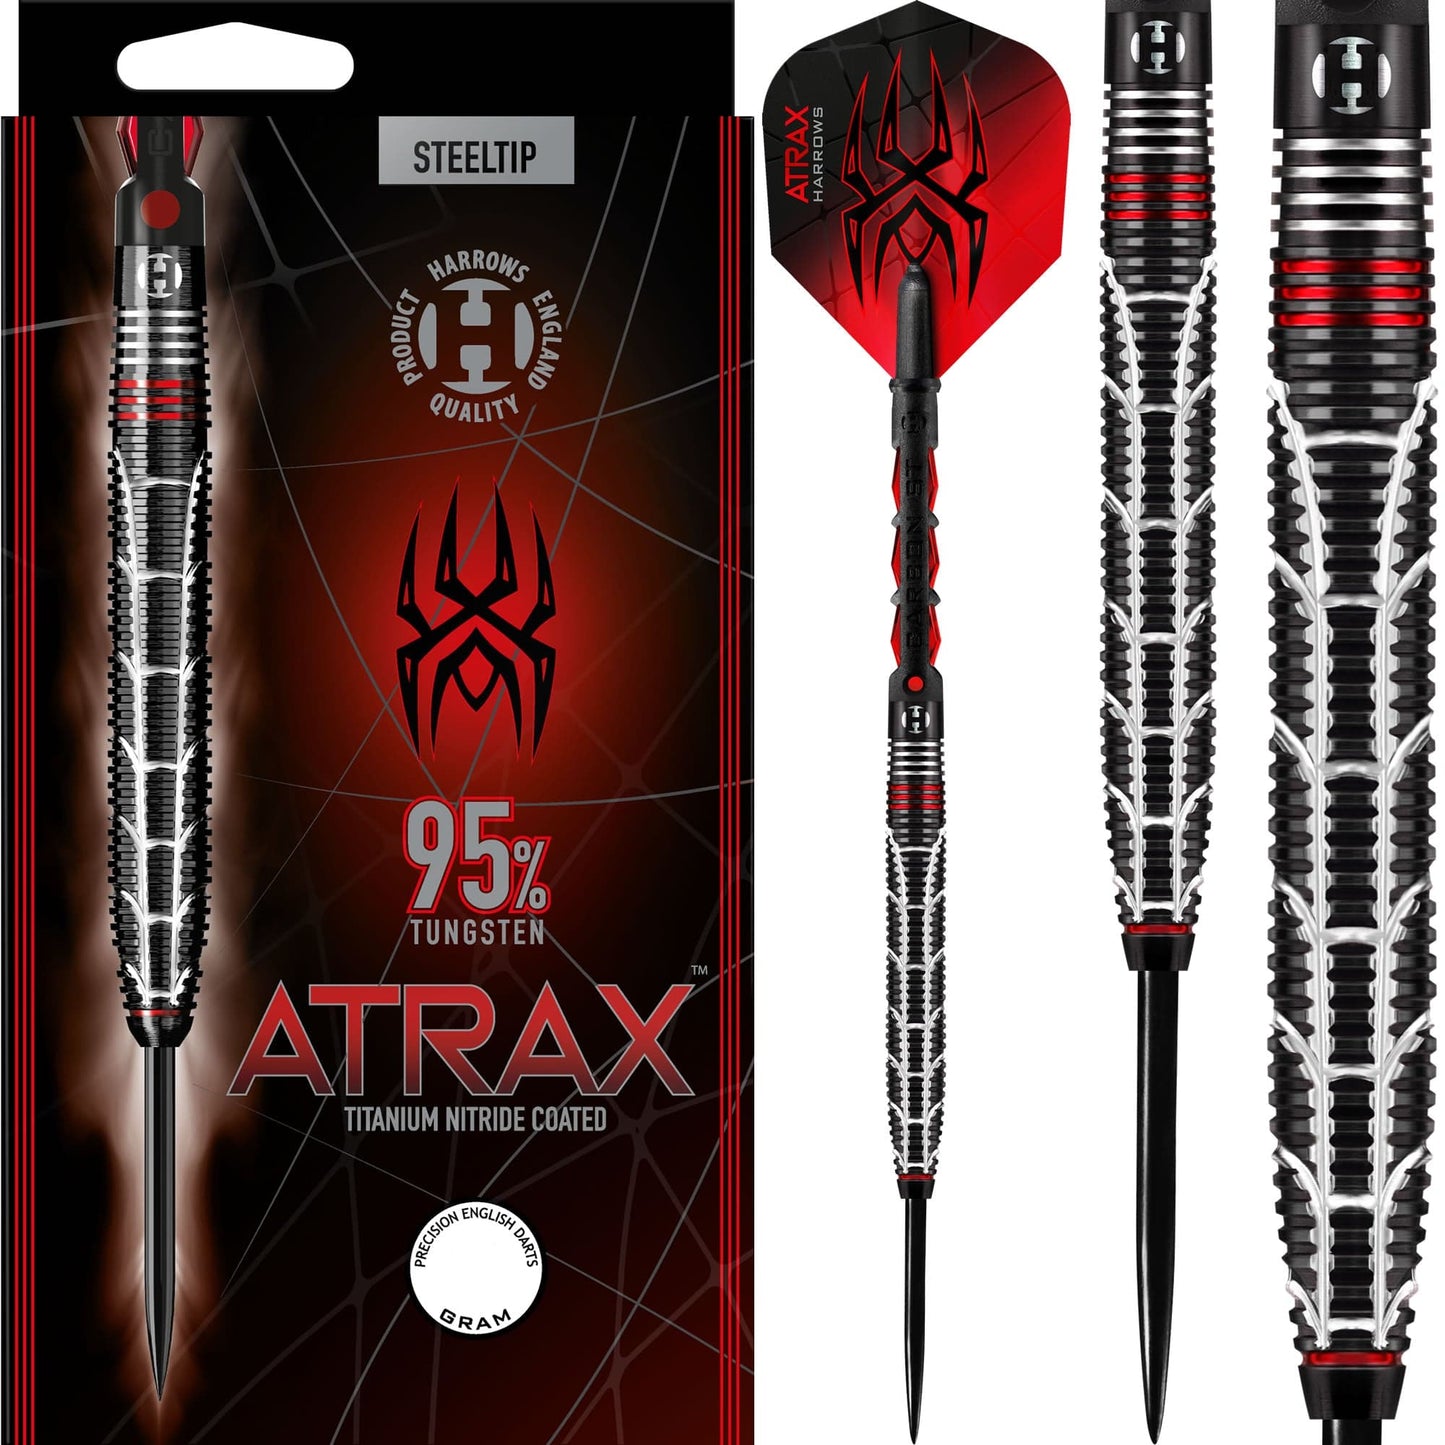 Harrows Atrax Darts - Steel Tip - 95% - Black Titanium